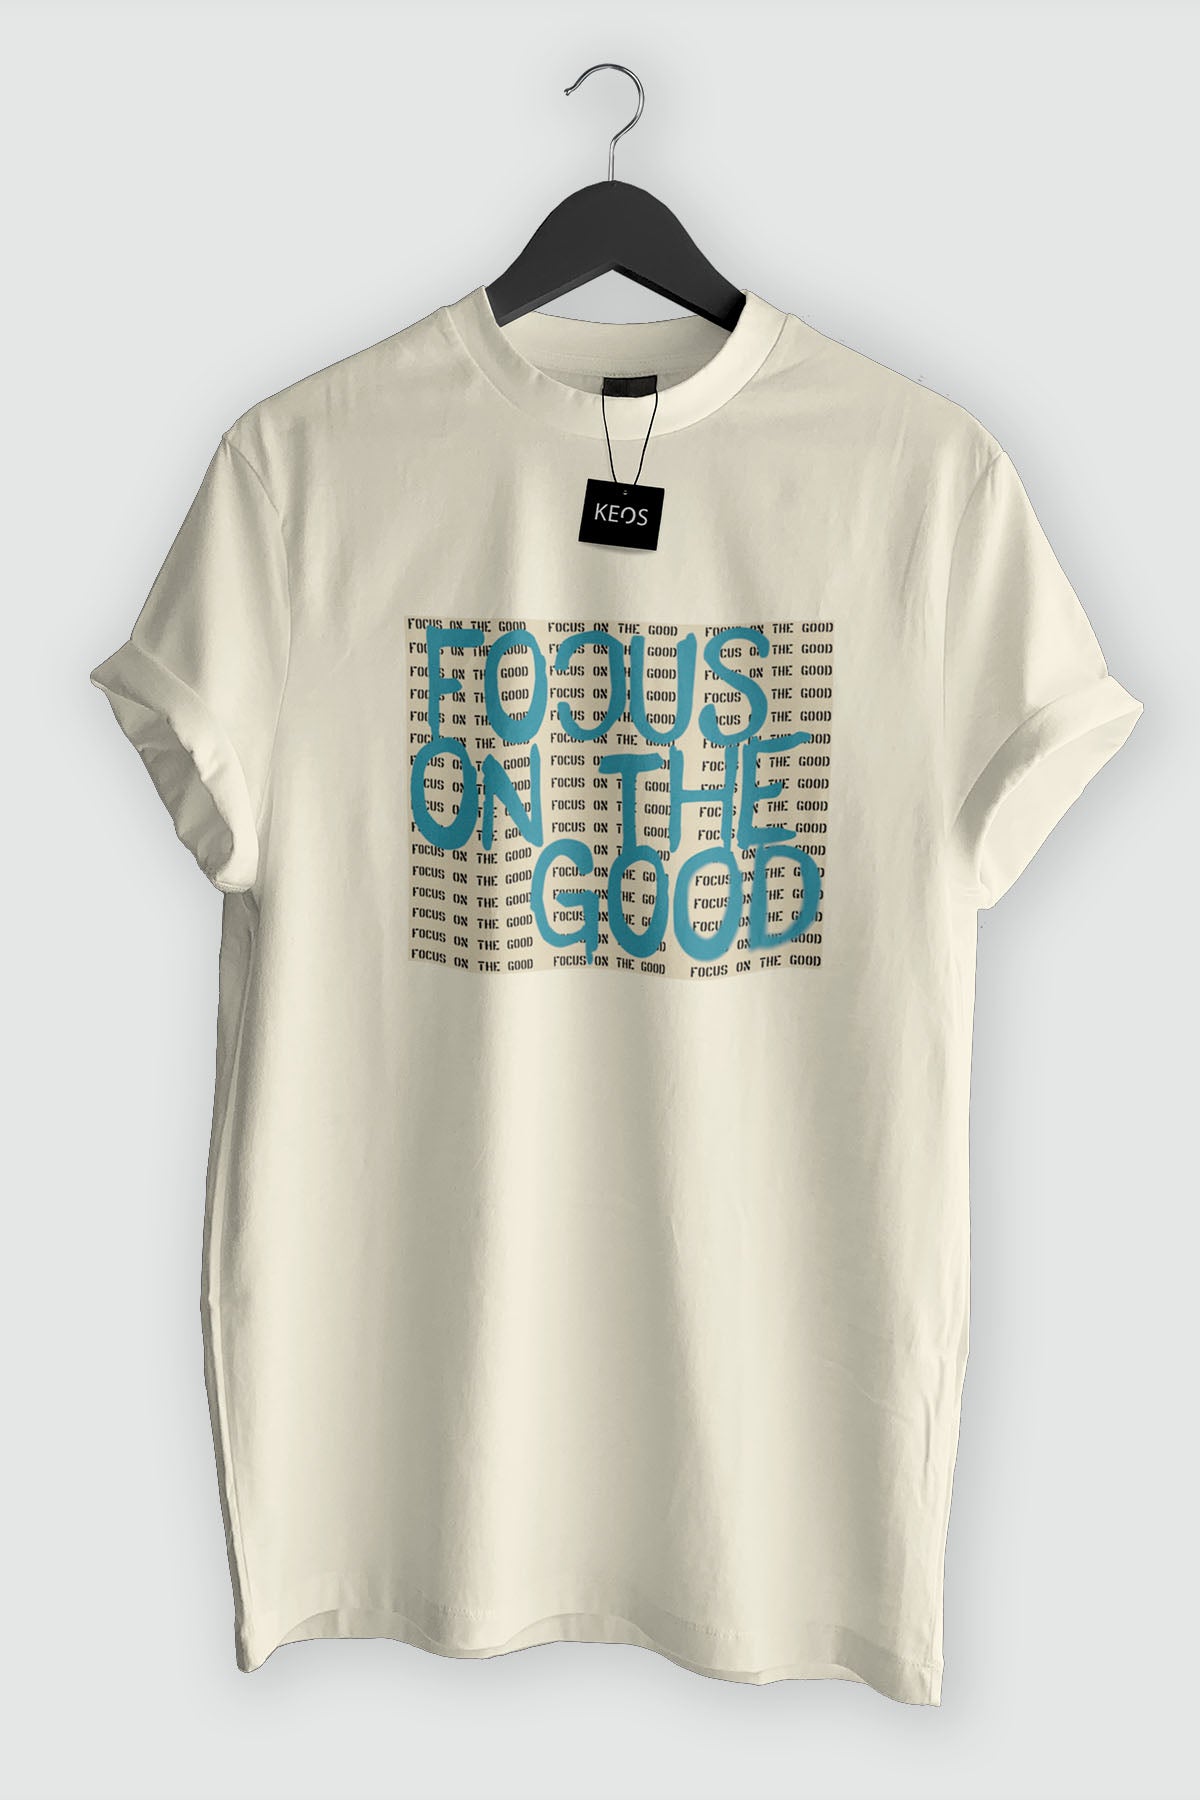 Focus On The Good Organic Cotton T-shirt - keos.life